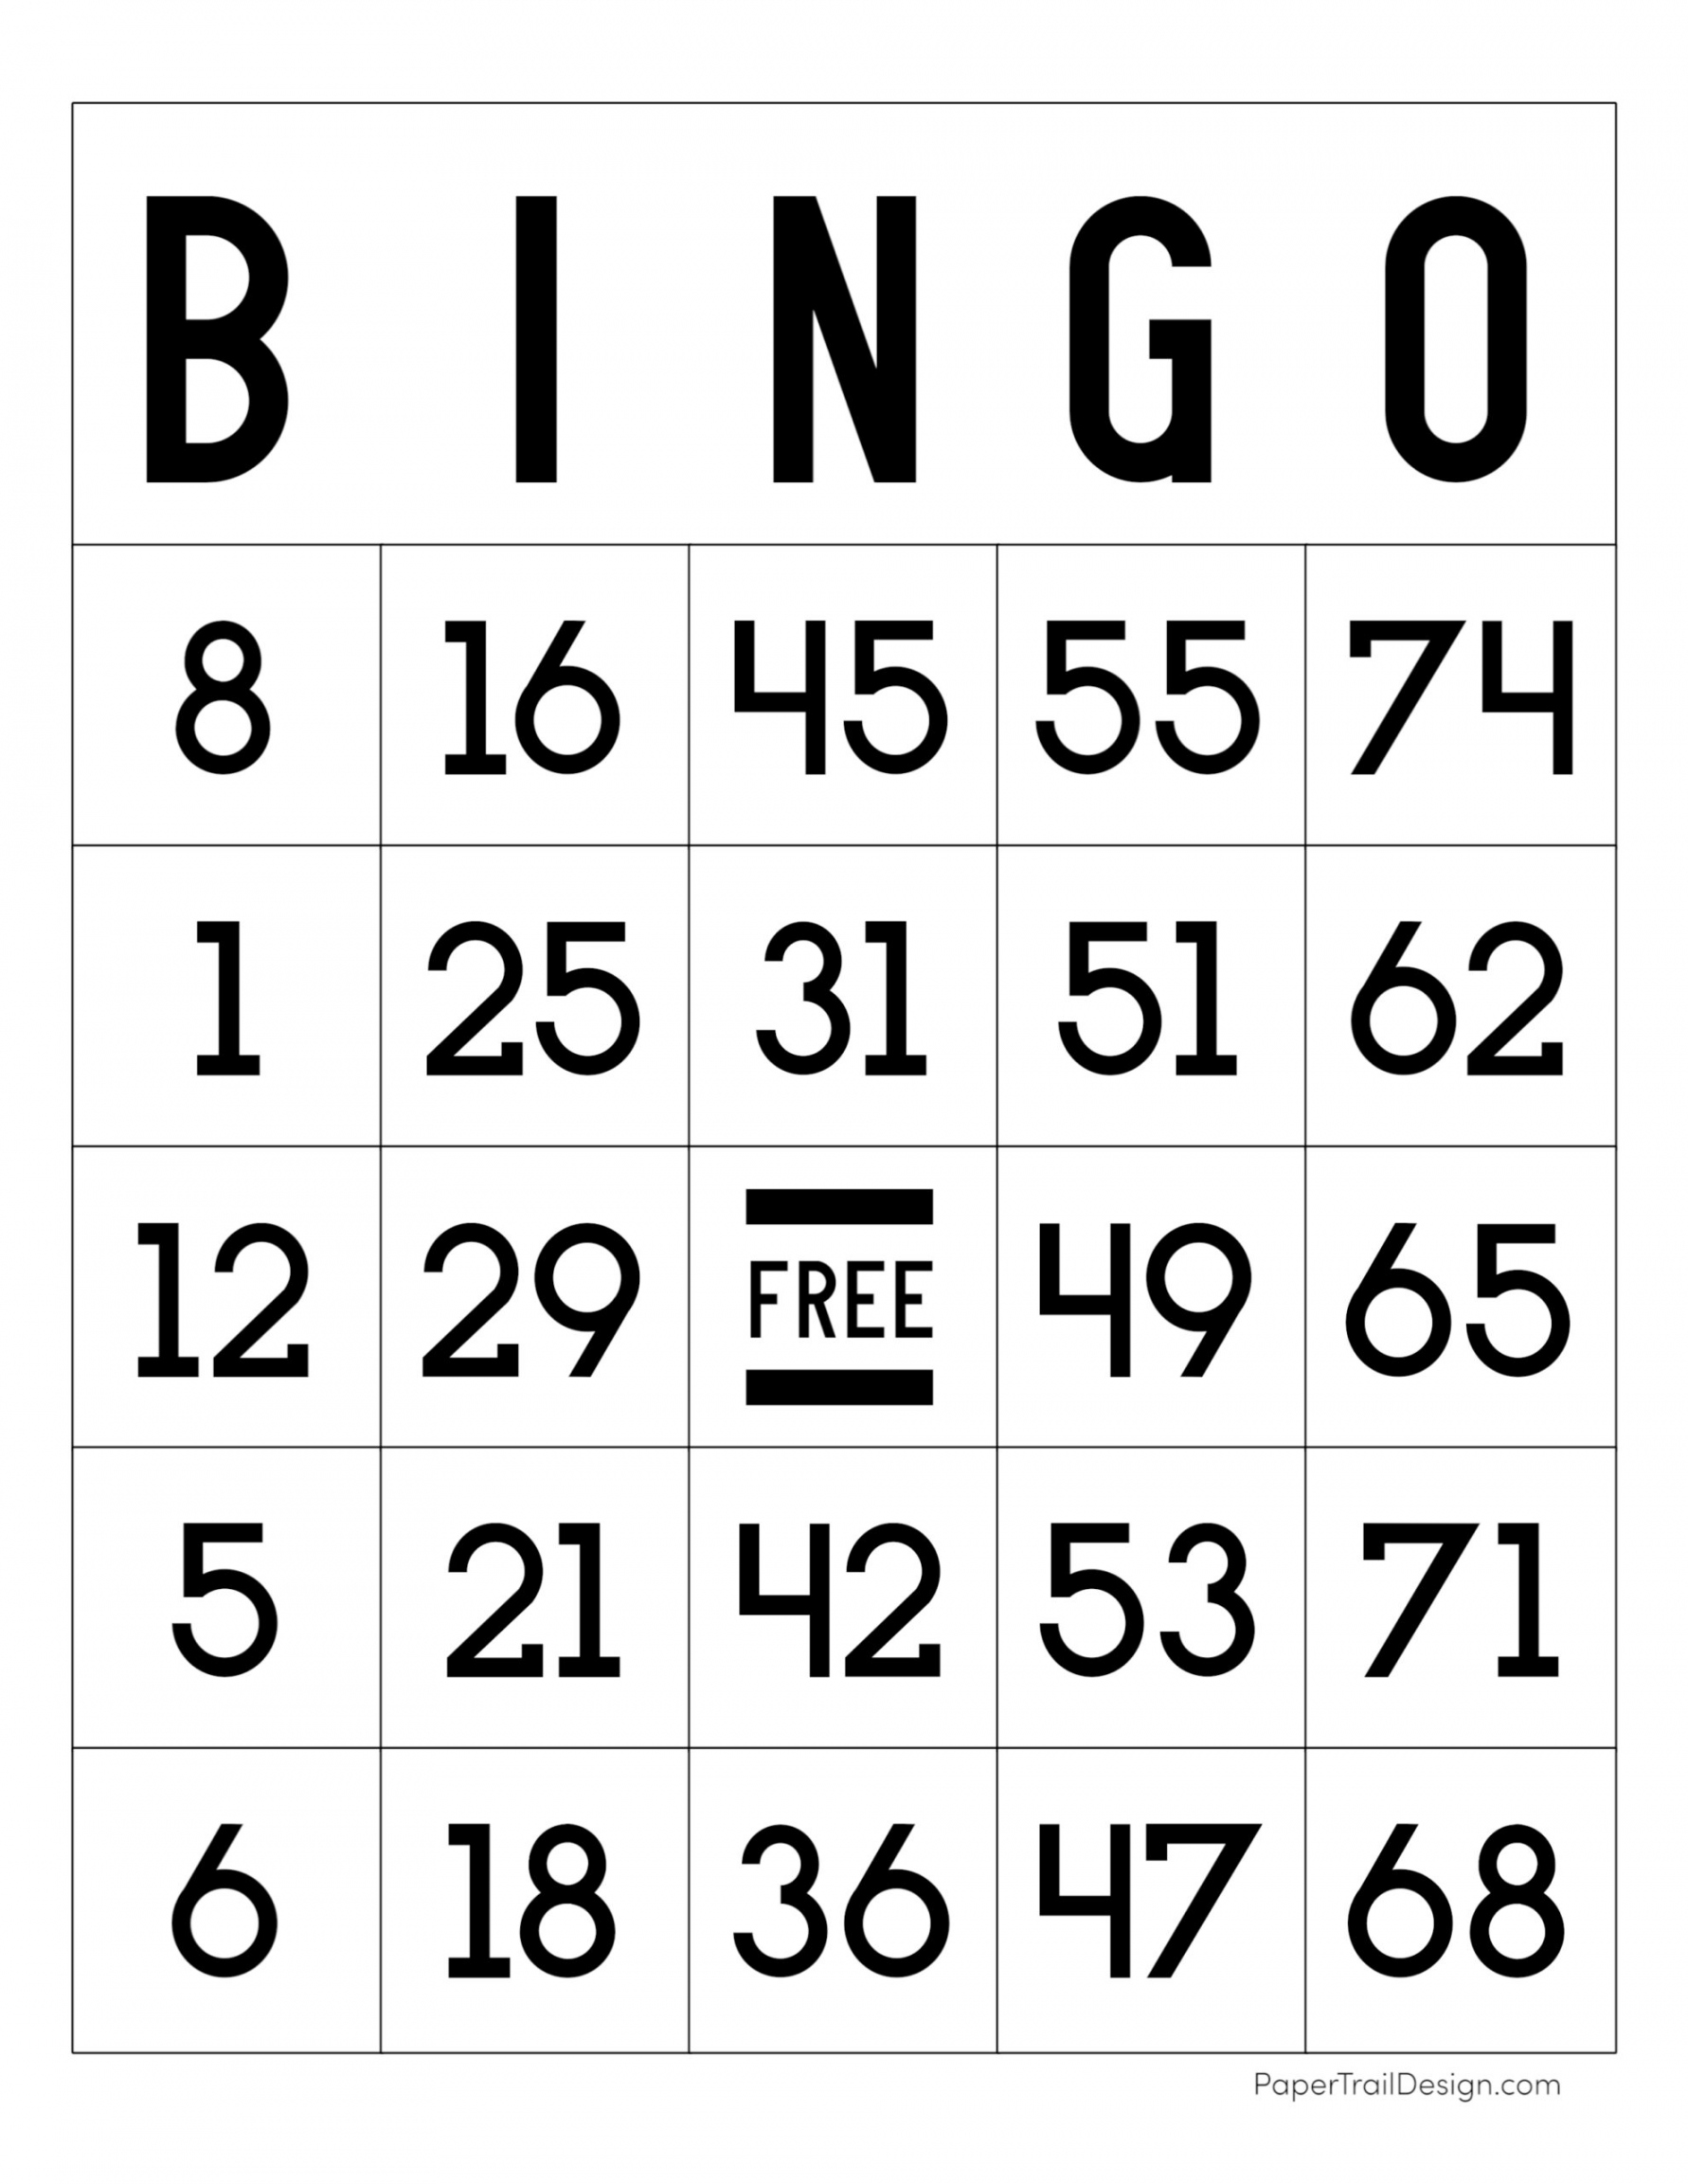 Bingo Cards Printable Free - Printable - Free Printable Bingo Cards - Paper Trail Design